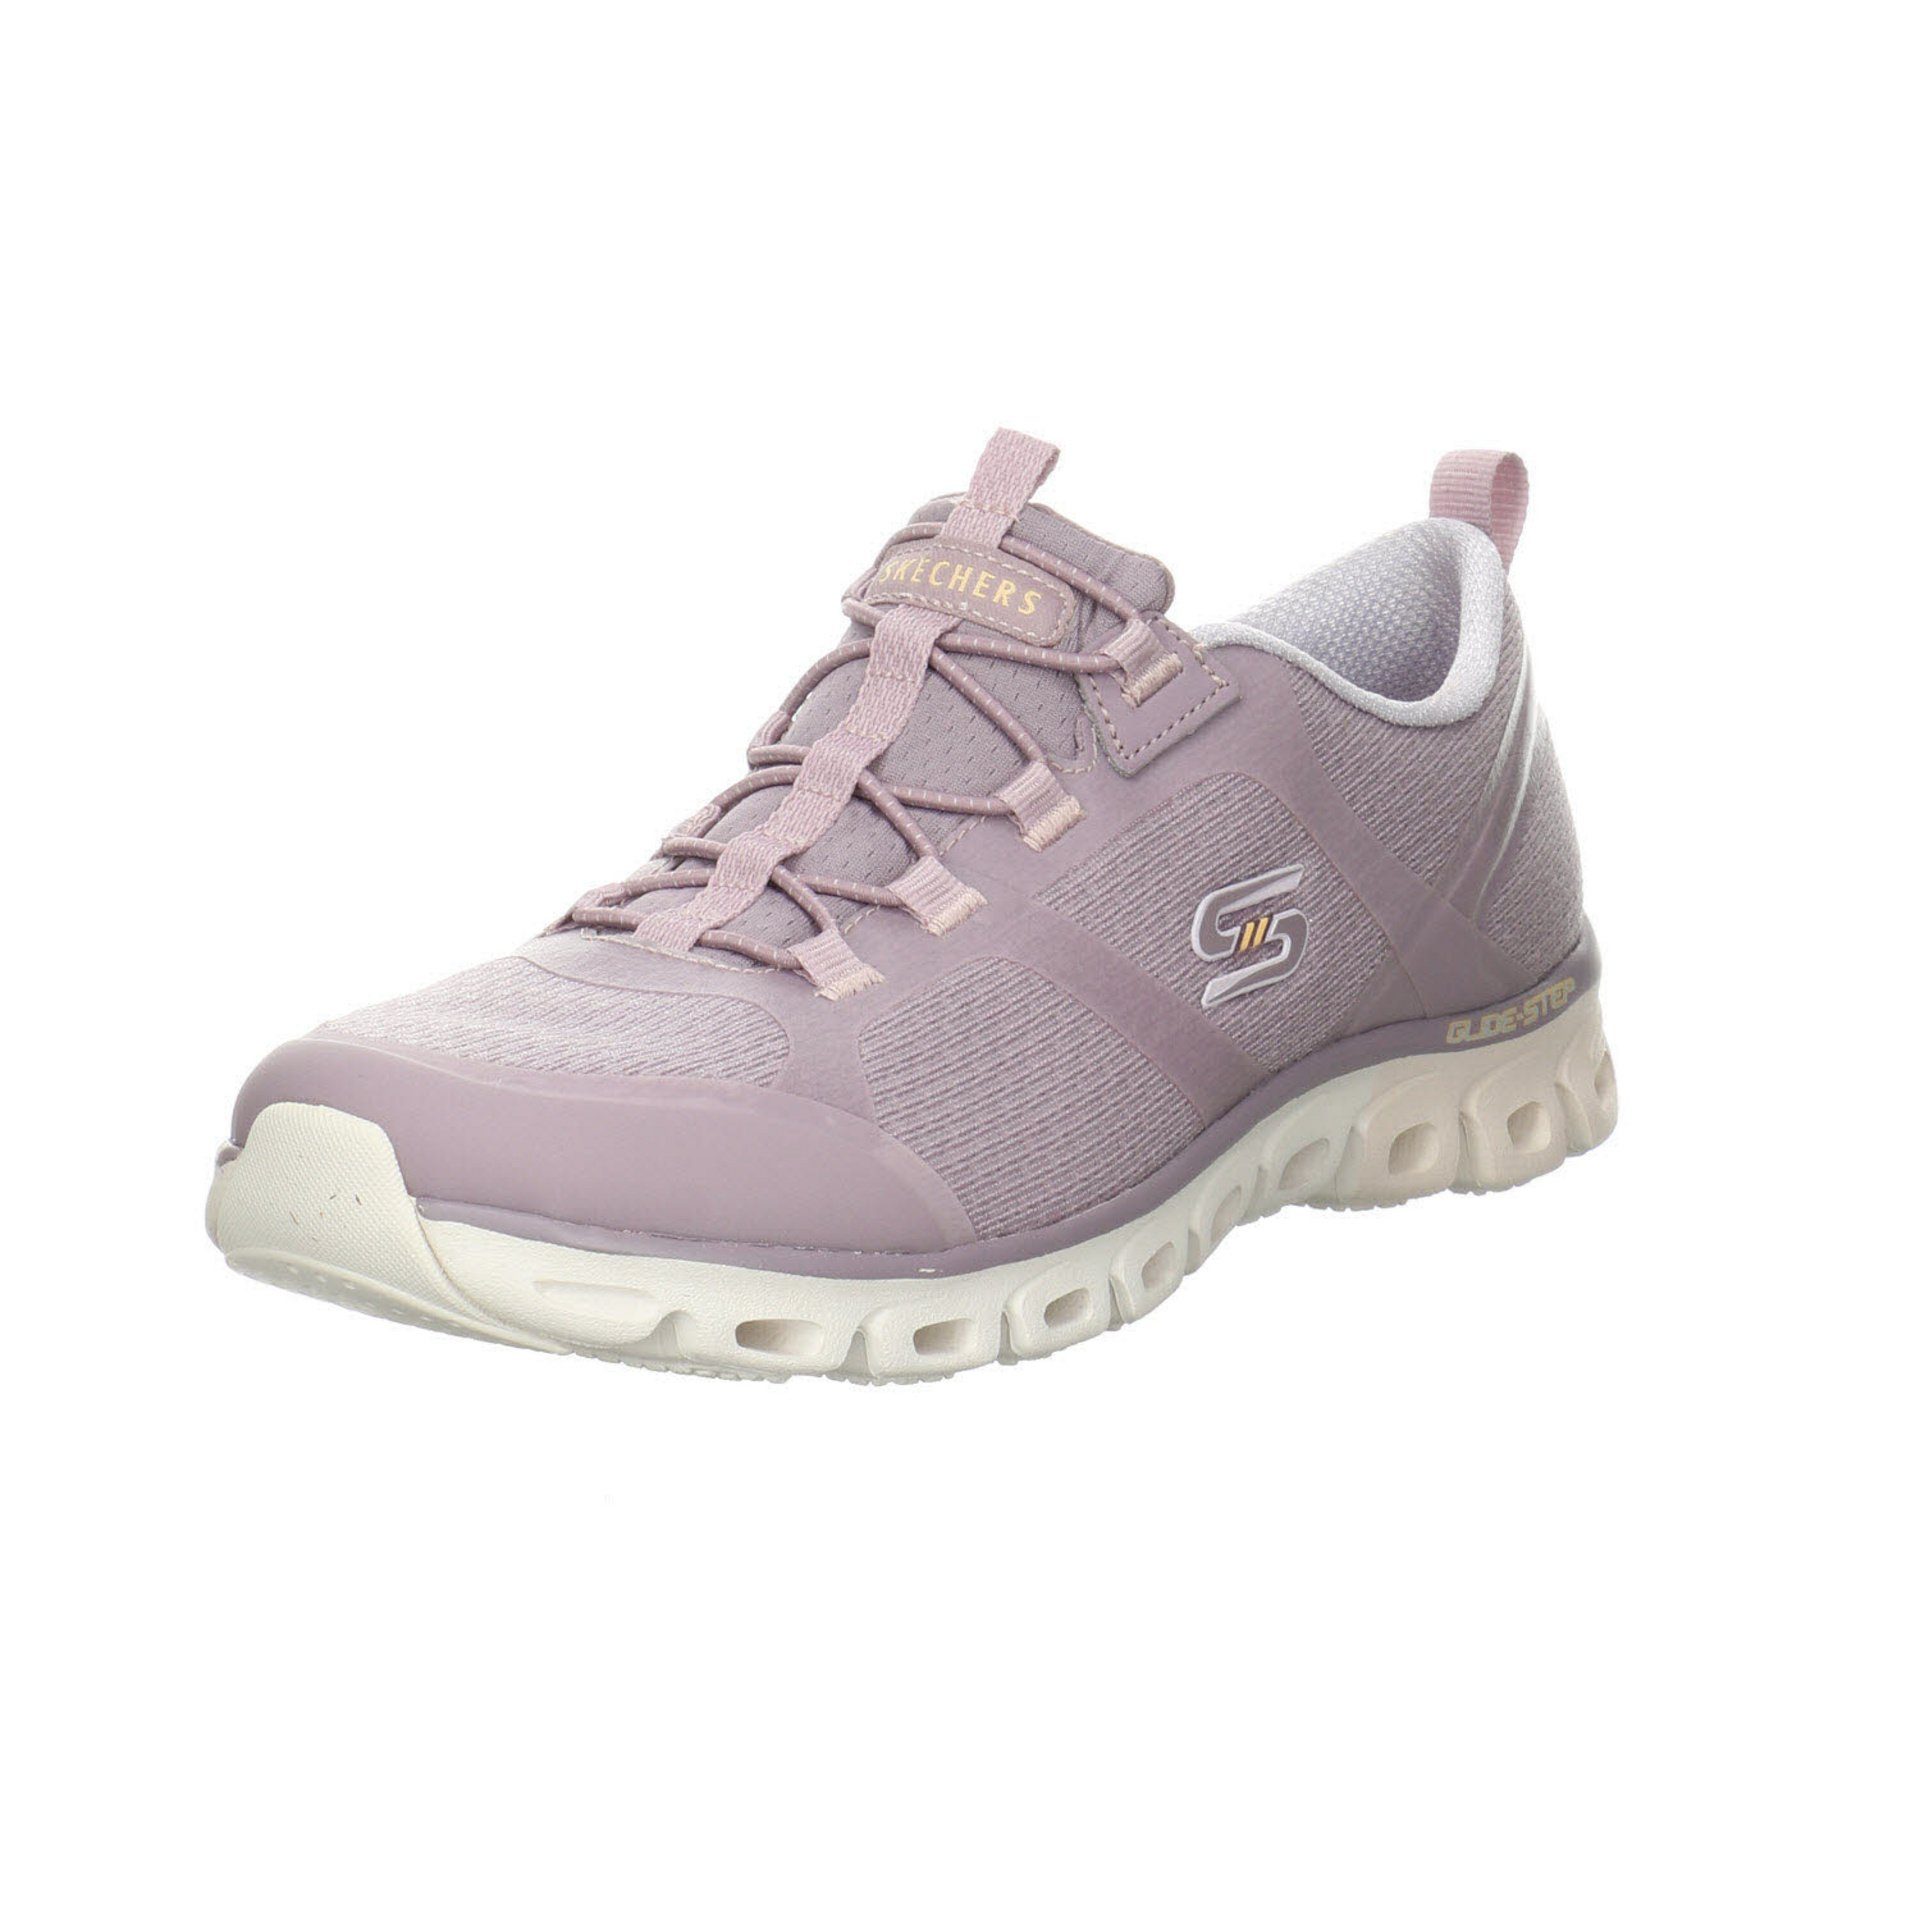 Skechers Damen Sneaker Schuhe Sneaker Synthetikkombination lavender/white